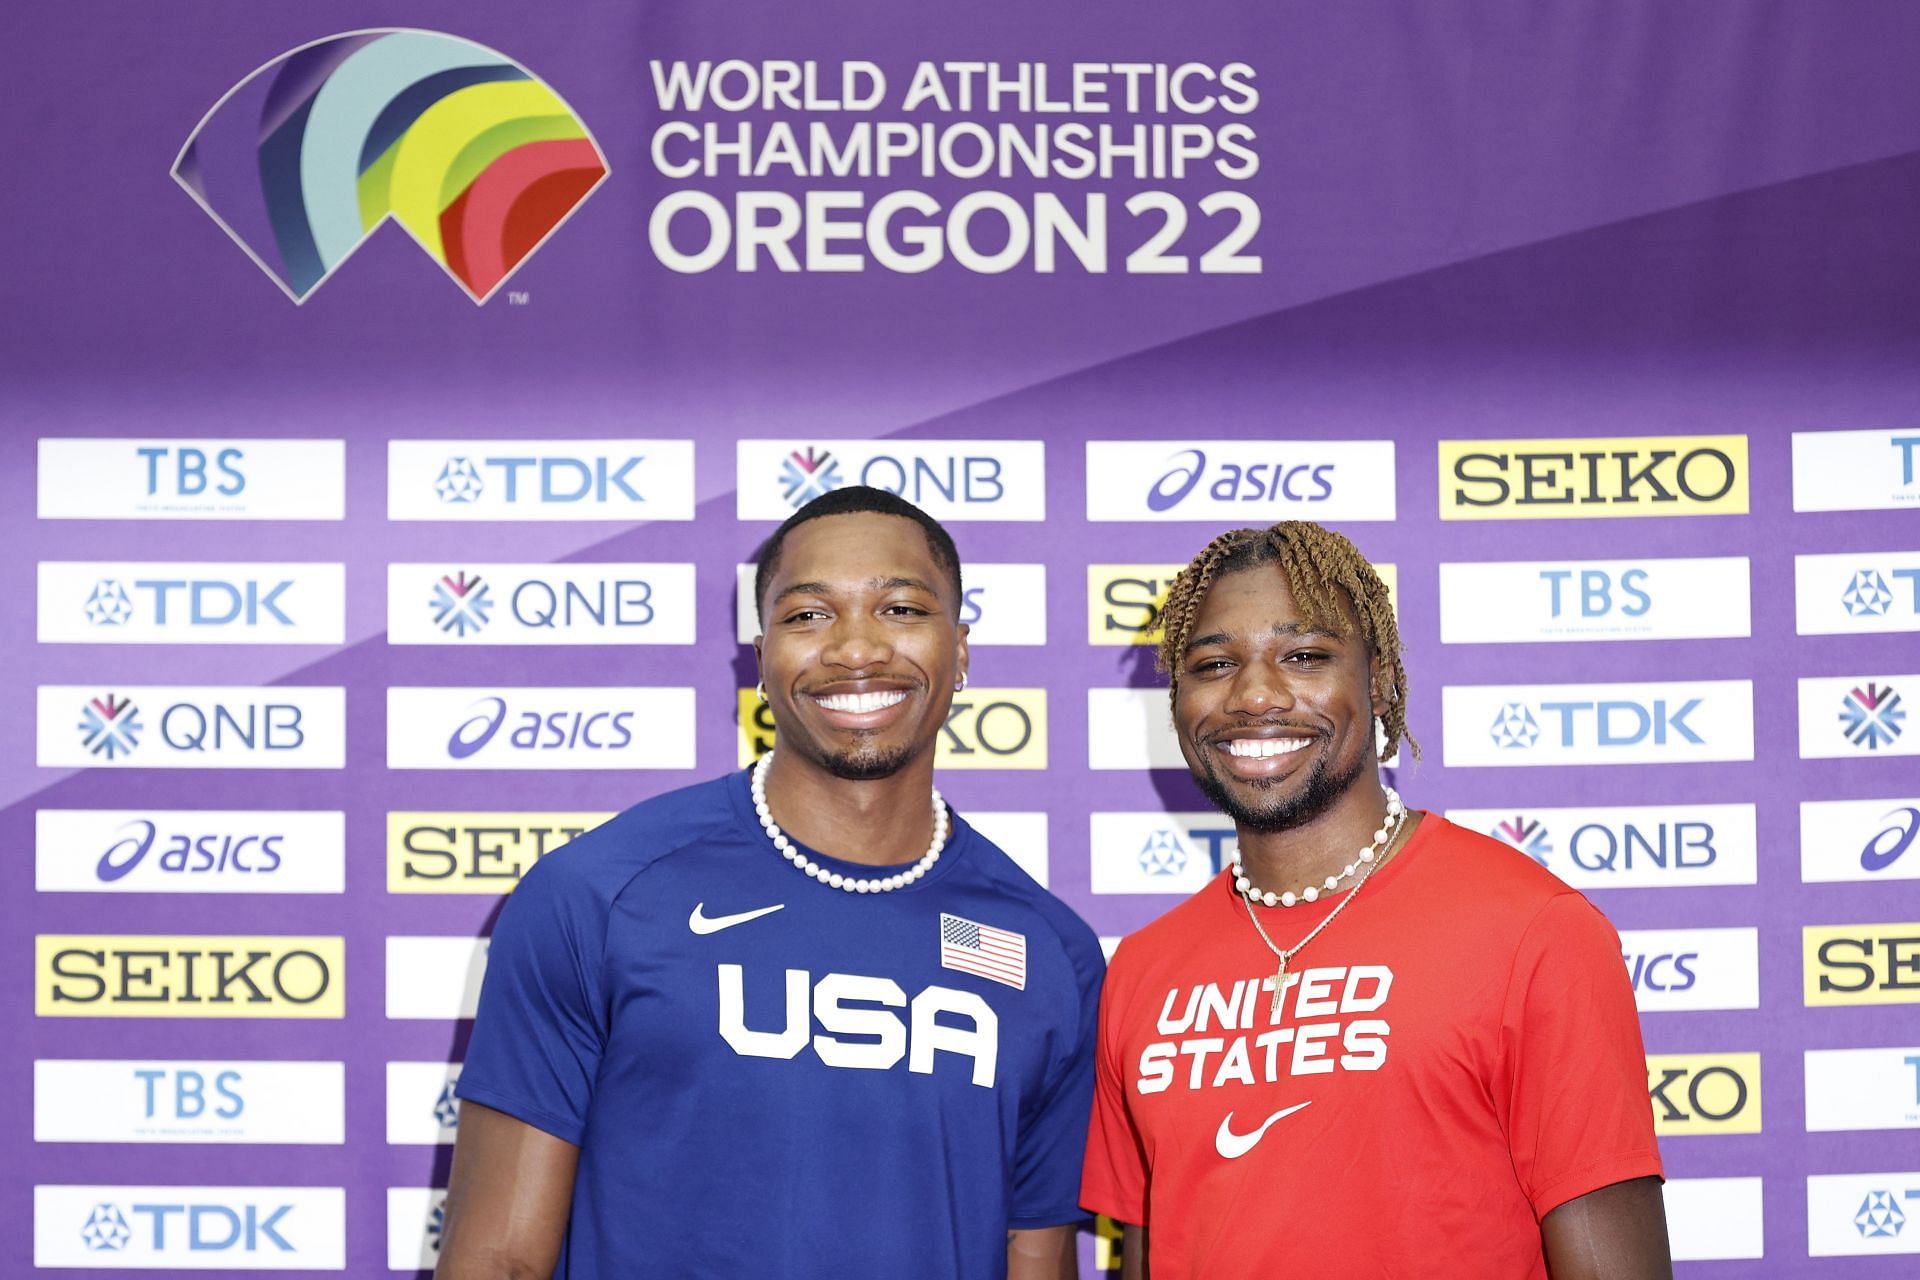 World Athletics Championships Oregon22 - Previews